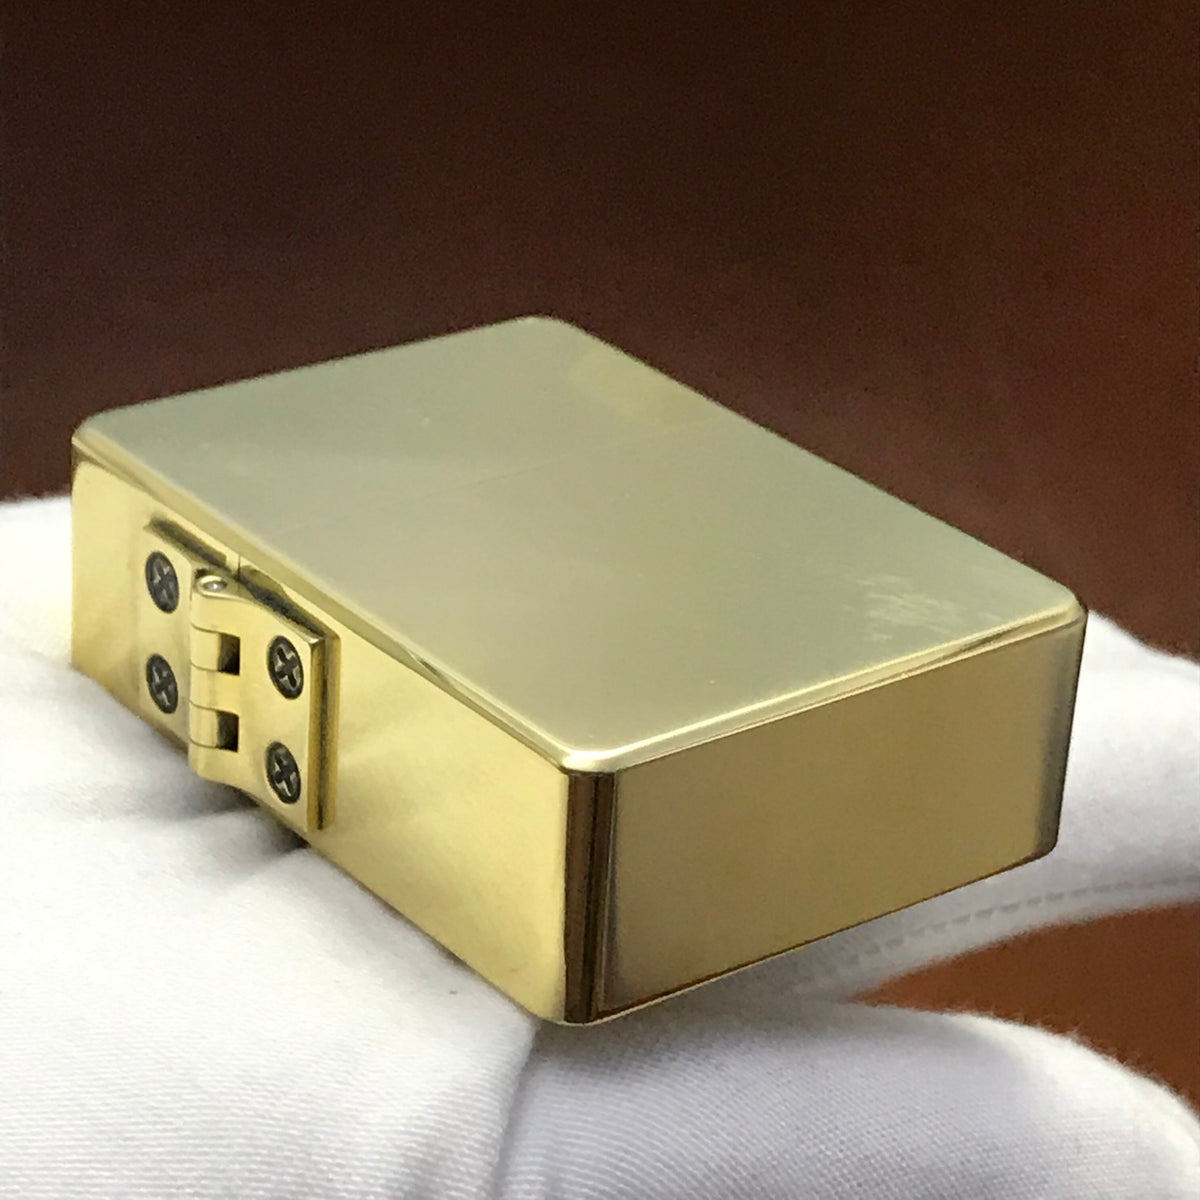 A gold copper heavy duty brass lighter.